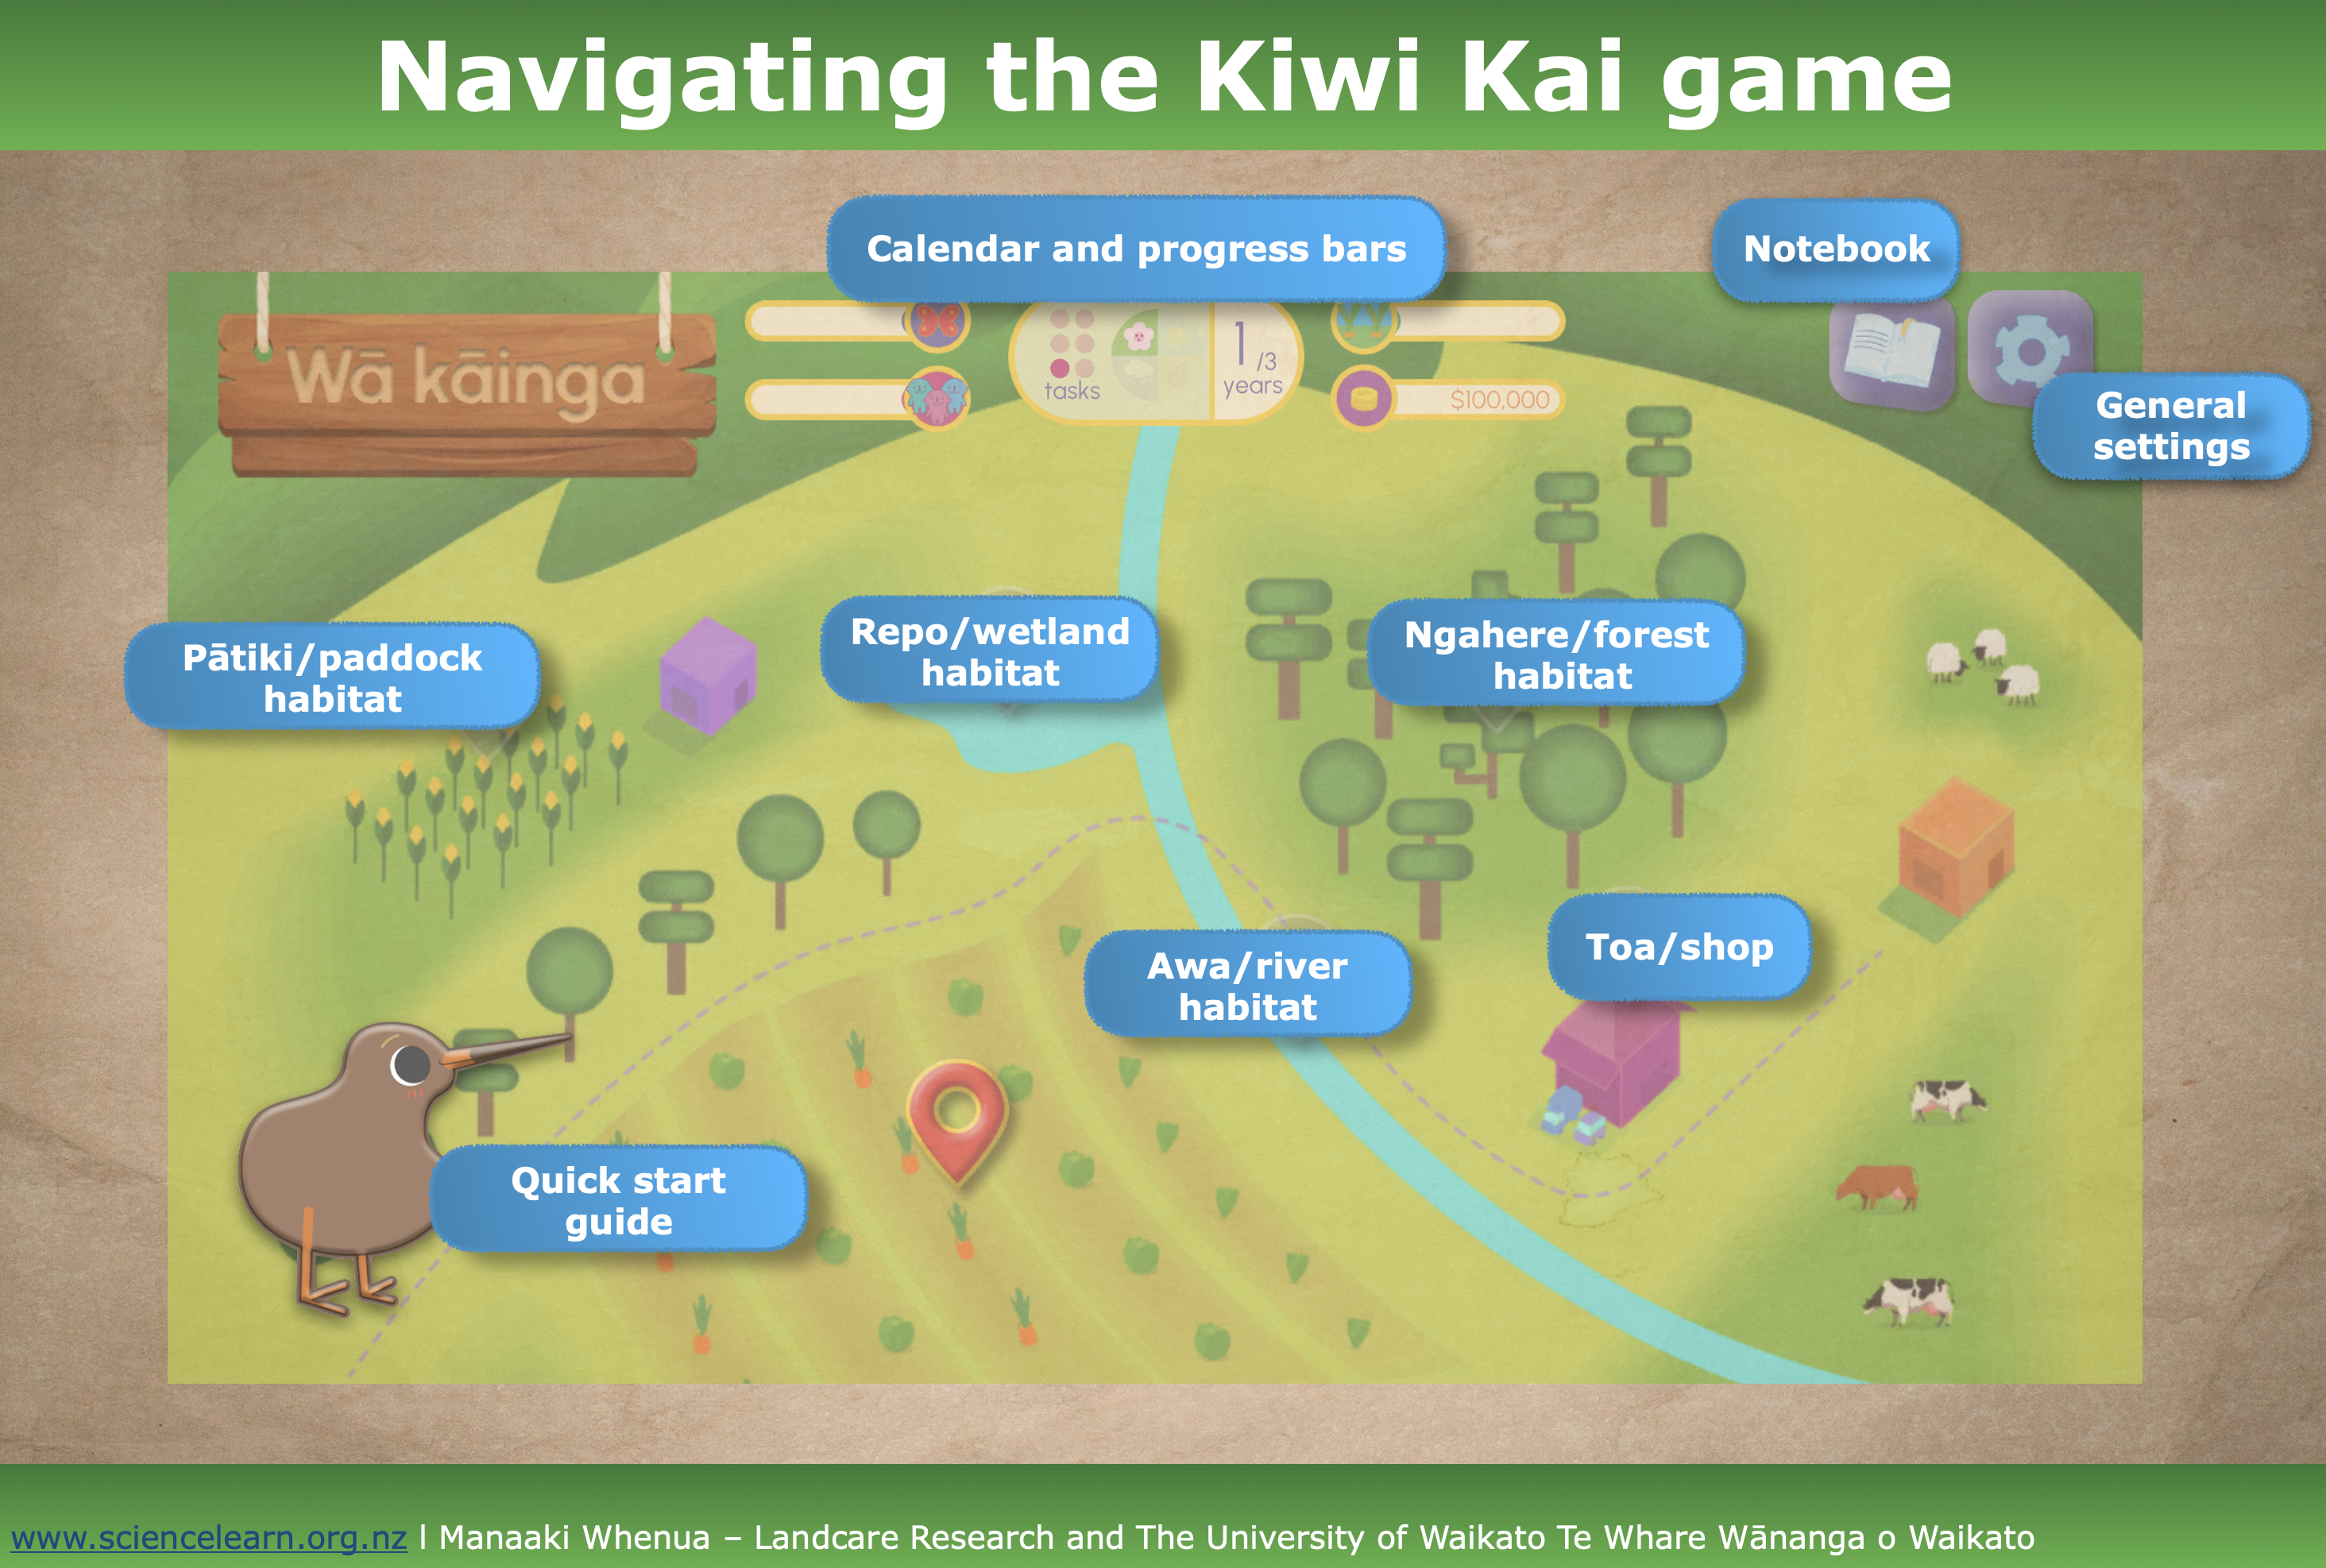 Interactive image map quick start guide to Kiwi Kai's virtual farm